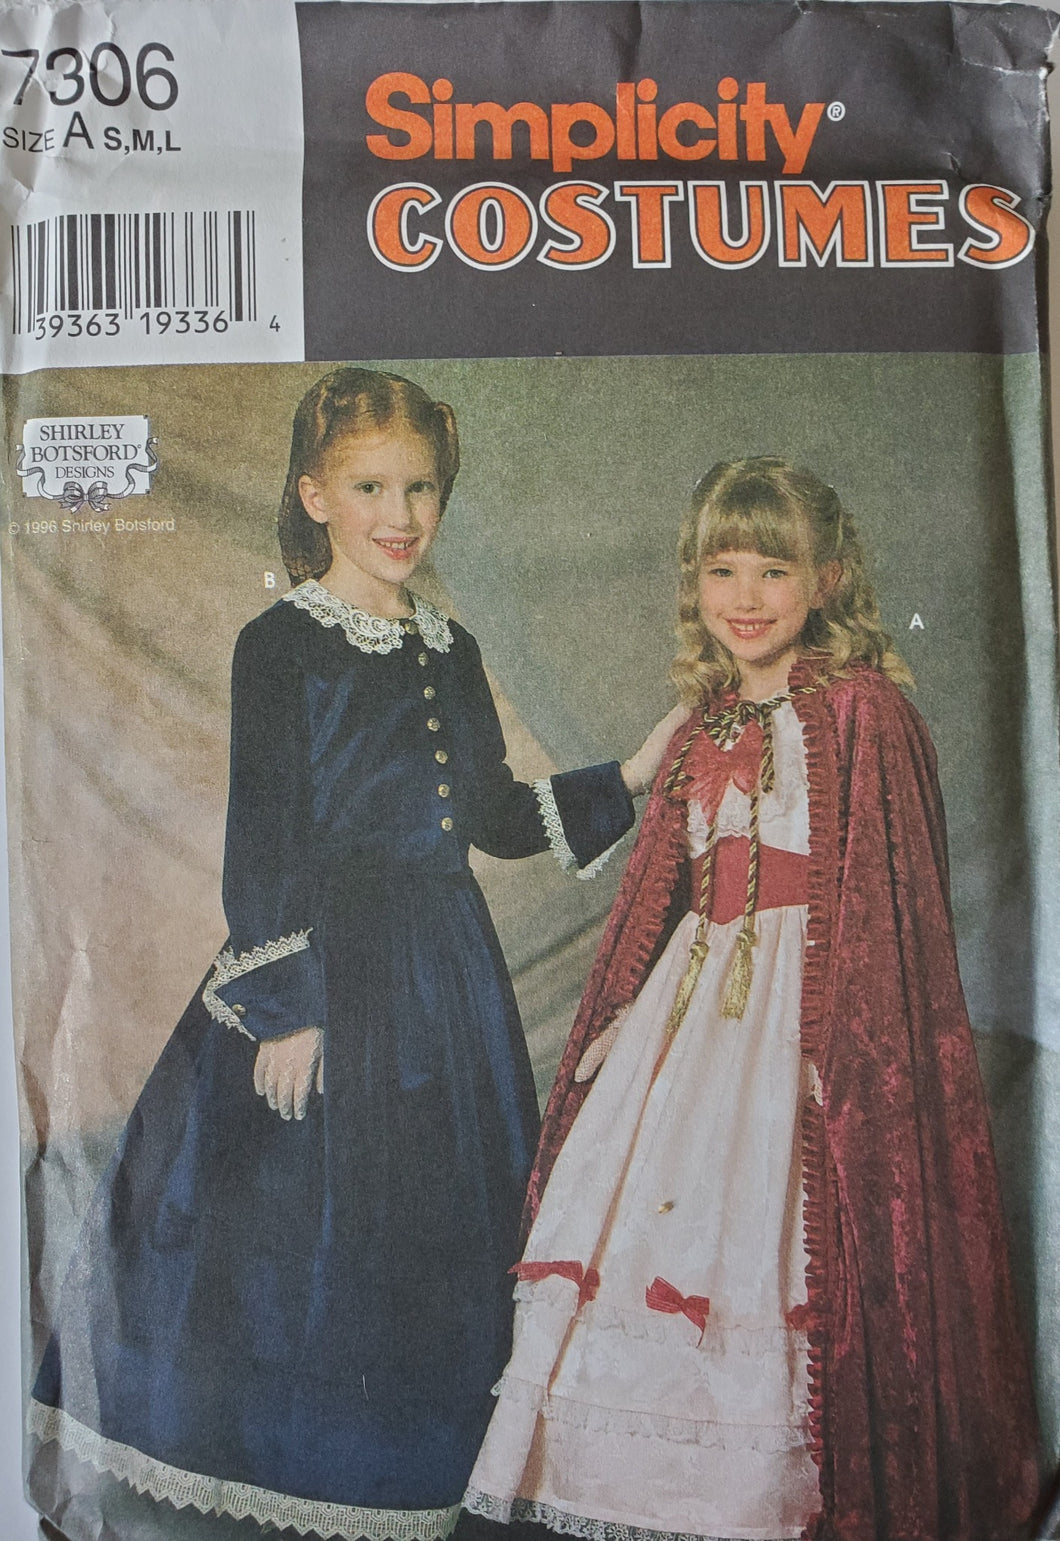 Simplicity 7306 UNCUT, Girl's Dress and Cape Costume, Size S-M-L, Vintage